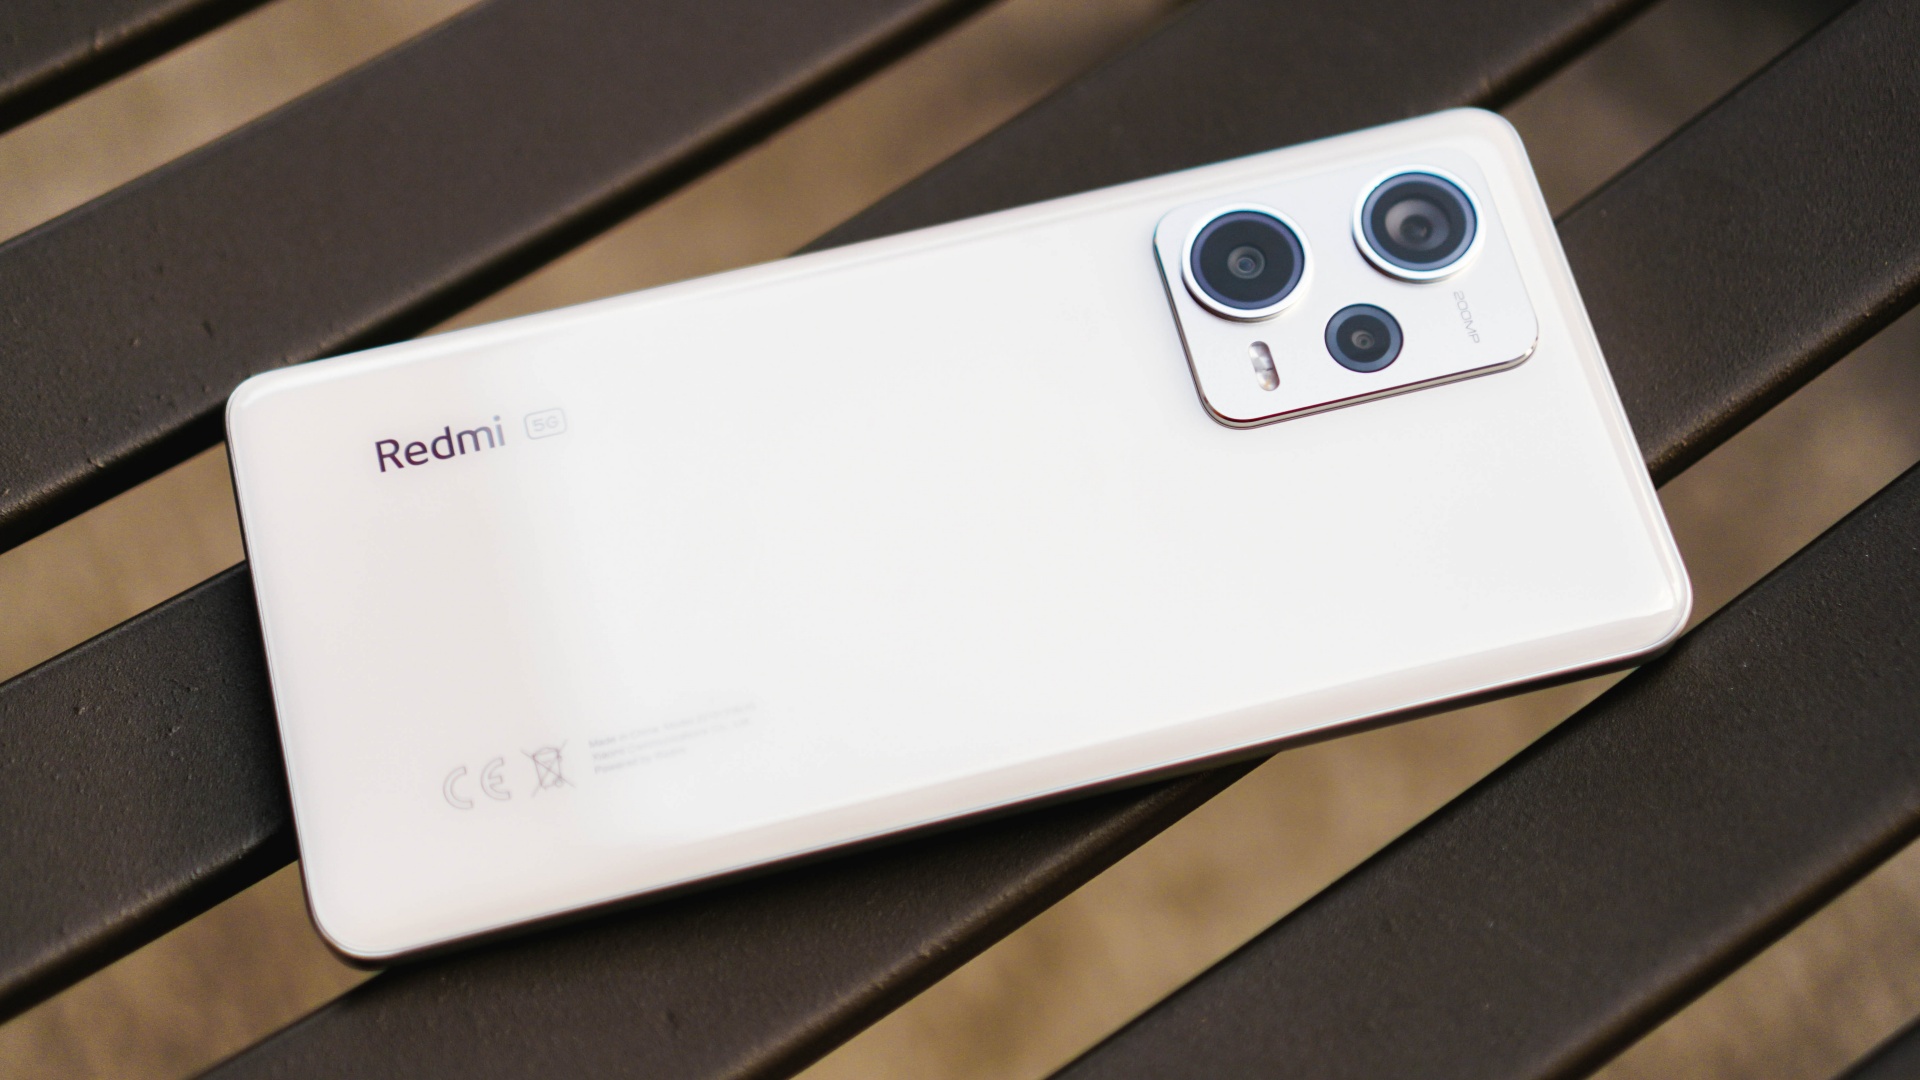 Redmi Note 12 Pro 5G - 50 MP Sony sensor,120 Hz AMOLED Display